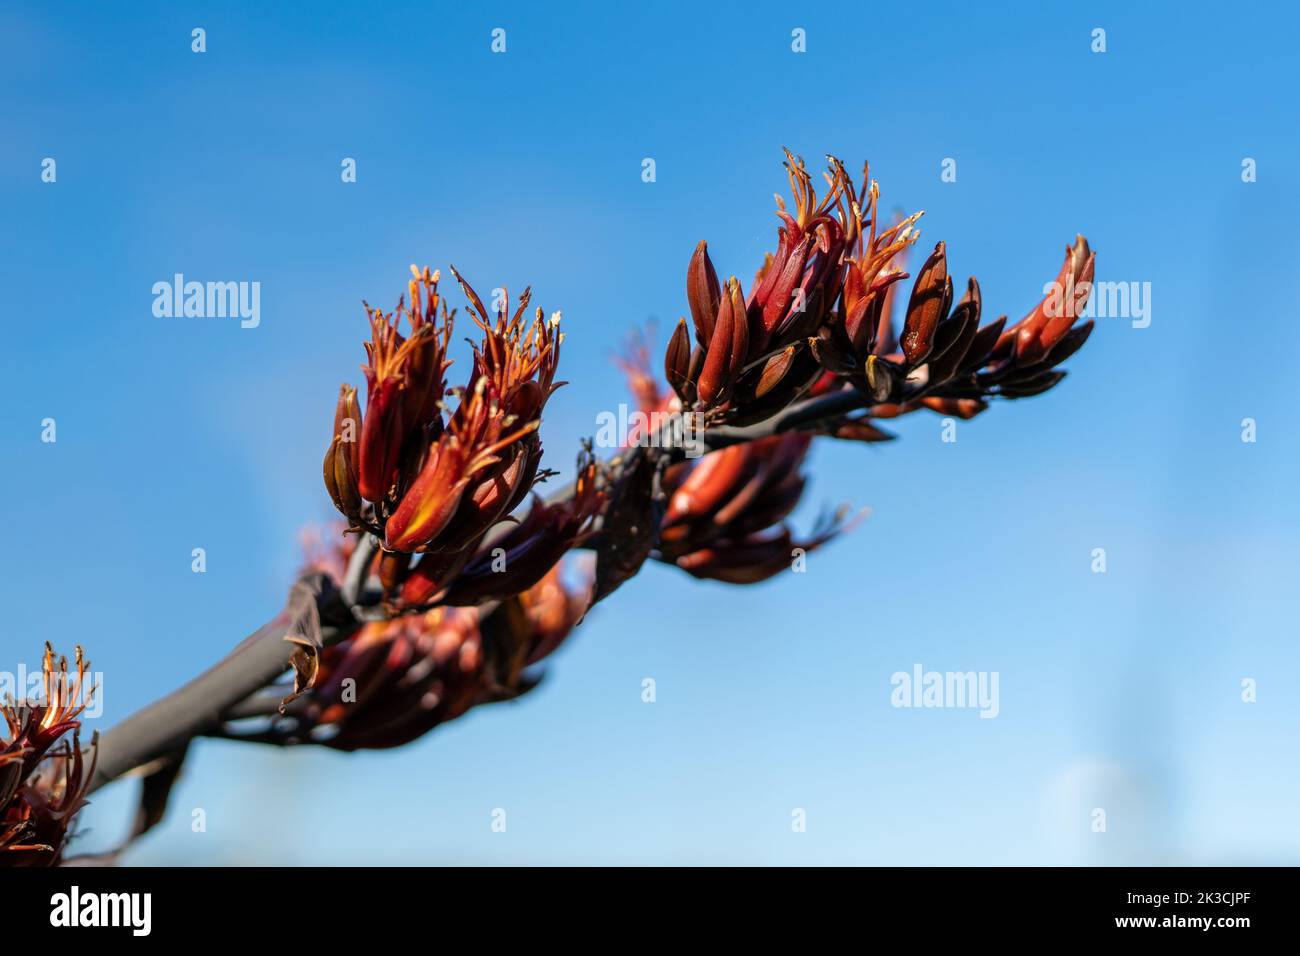 A closeup shot of phormium tenax flowers against a blue sky Stock Photo